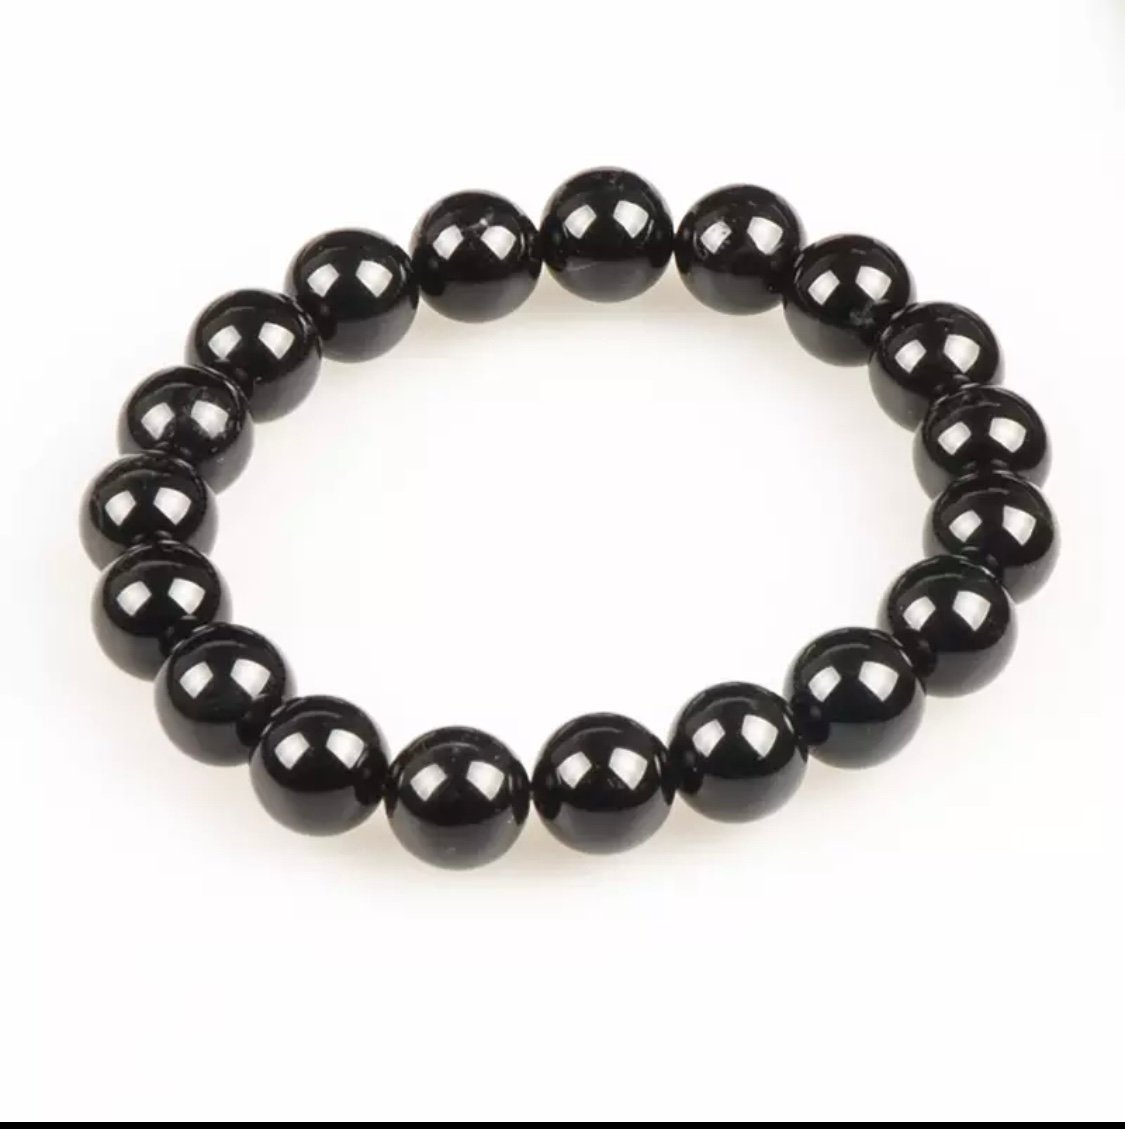 meaning of black obsidian bracelet